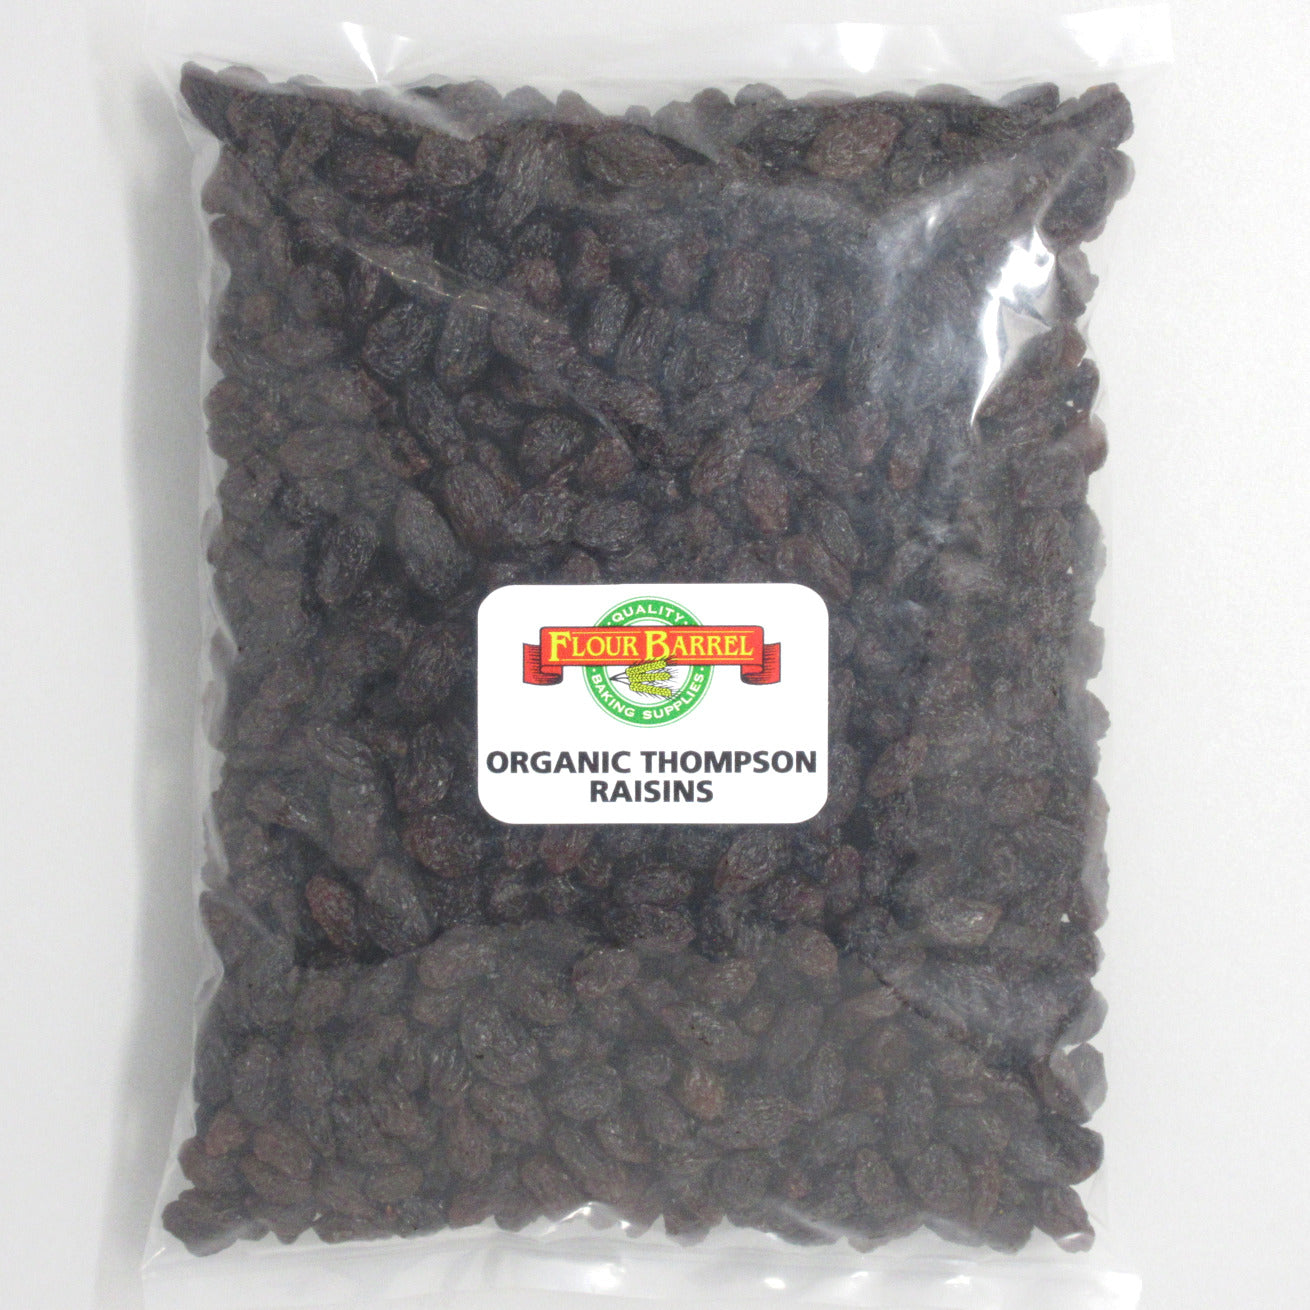 Flour Barrel product image - Organic Thompson Raisins